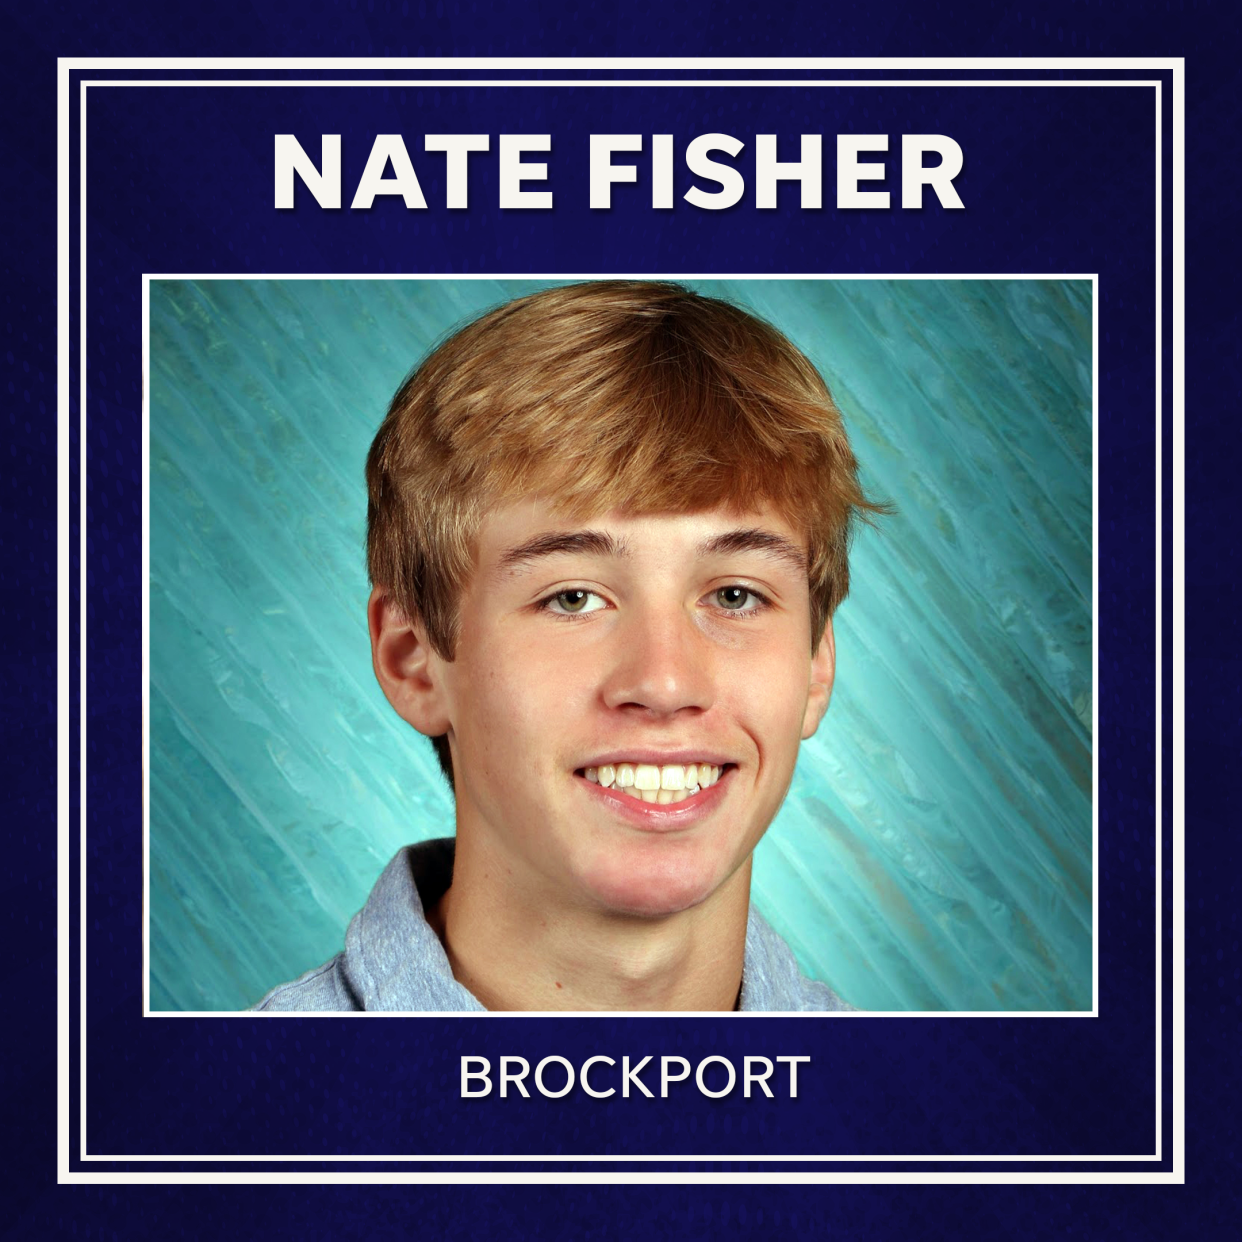 Nate Fisher